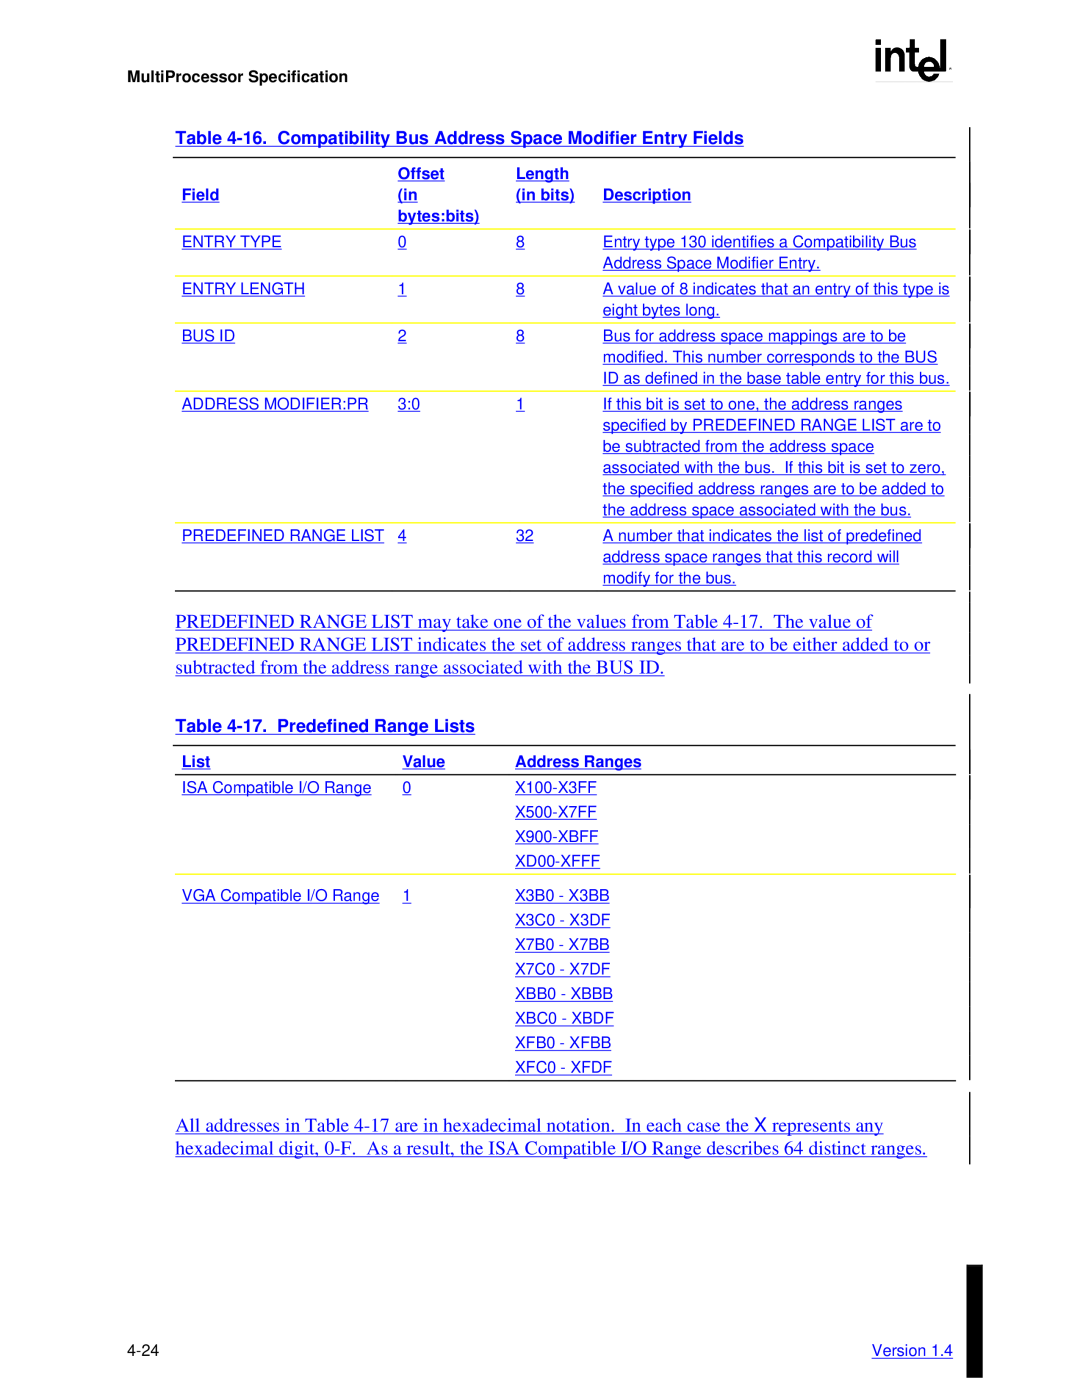 Intel MultiProcessor manual 17.Predefined Range Lists 